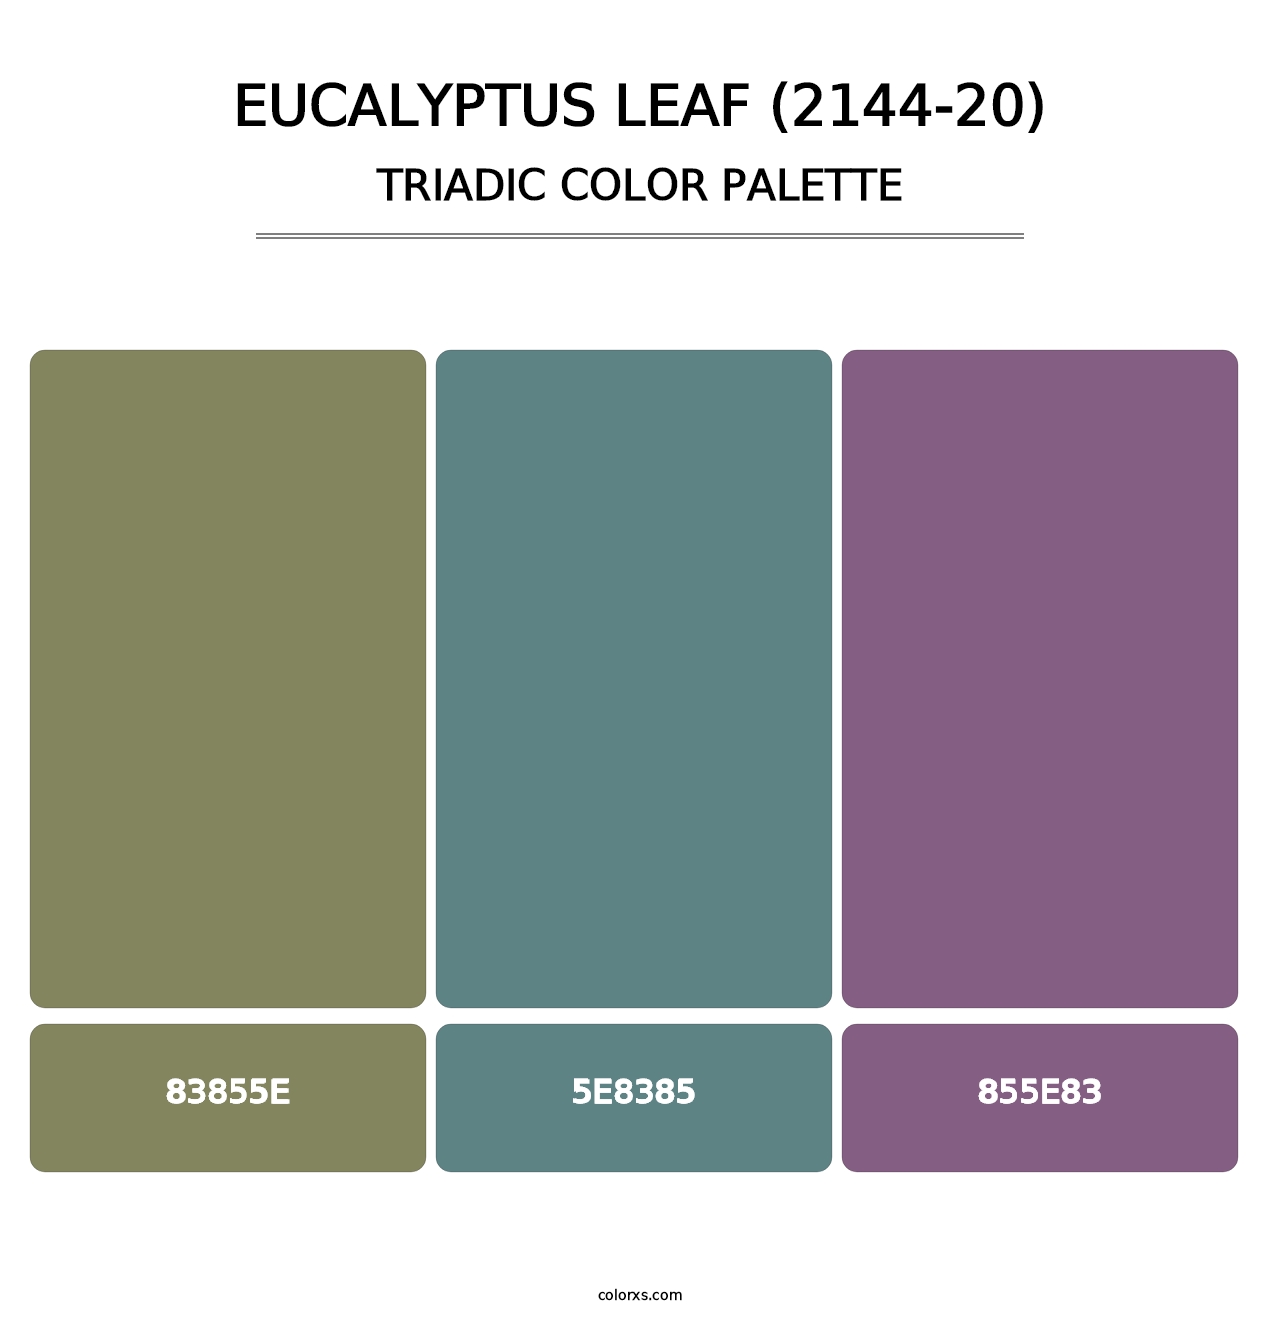 Eucalyptus Leaf (2144-20) - Triadic Color Palette